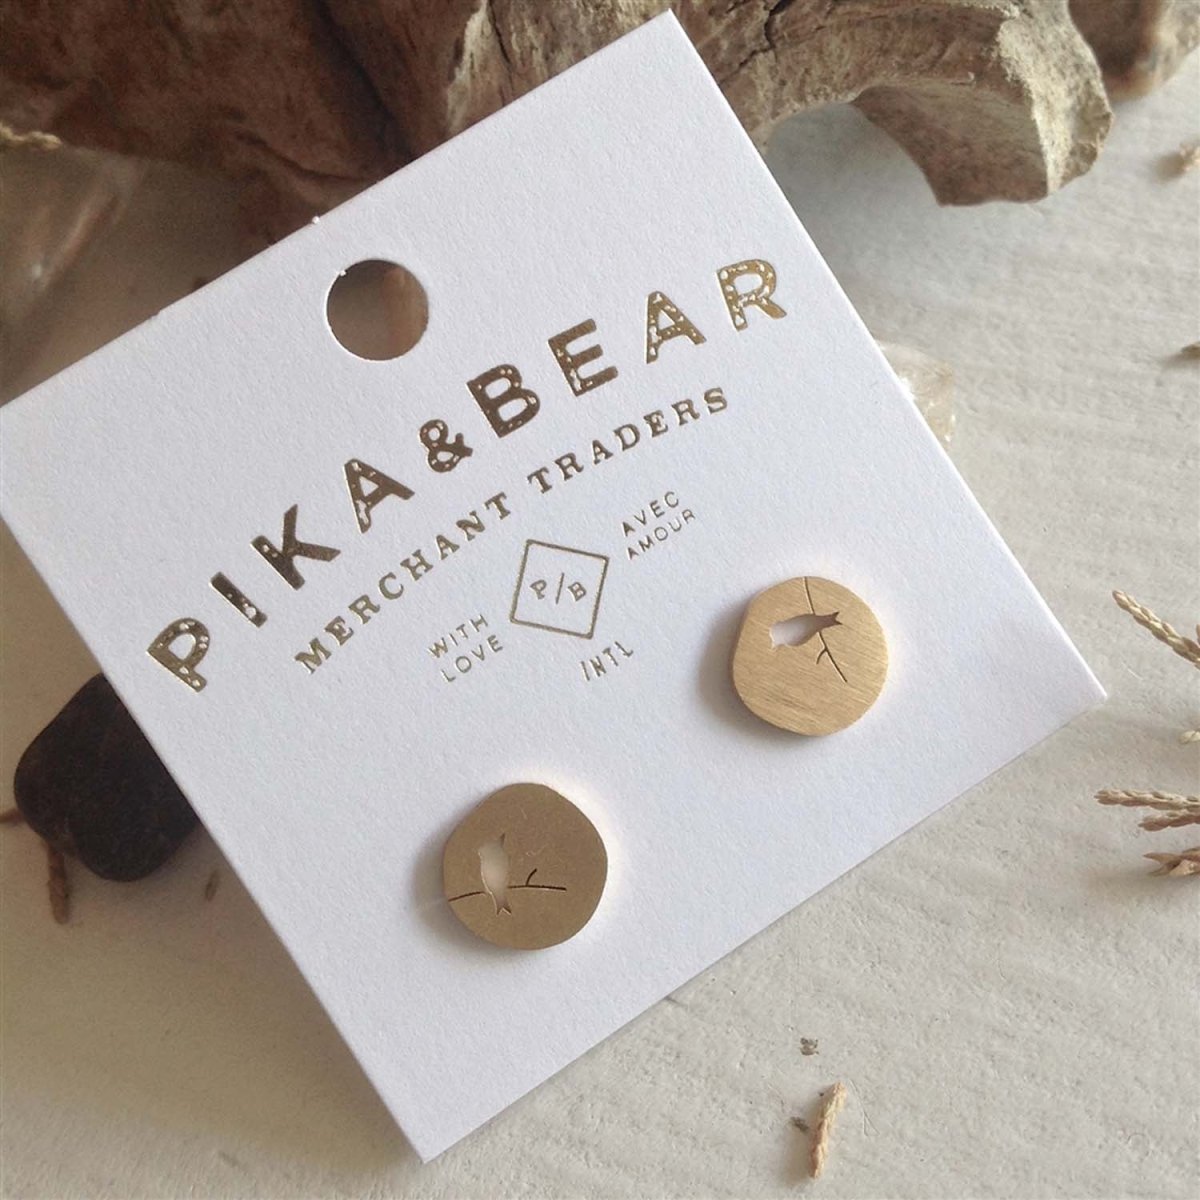 PIKA & BEAR 'PERCHED' SPARROW ON BRANCH SILHOUETTE STUD EARRINGS - jewellery - PIKA & BEAR